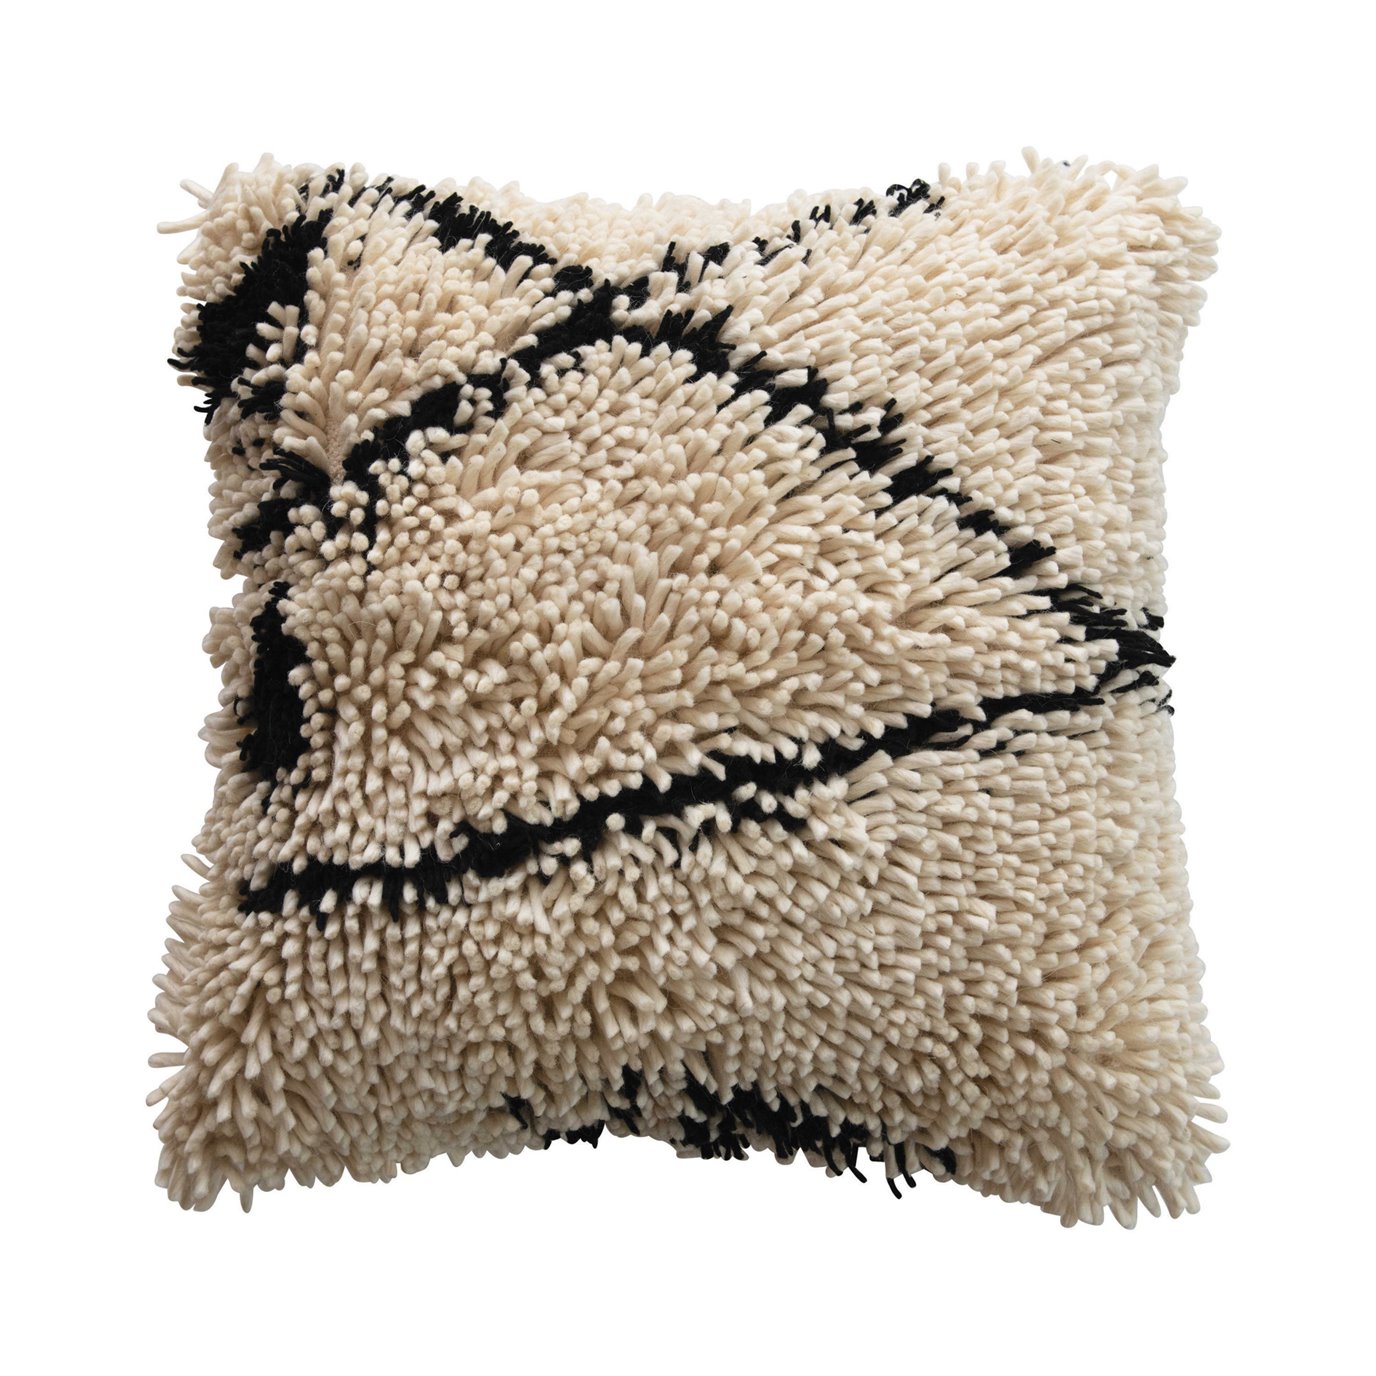 Woven Wool Shag Pillow, Black & Cream Color